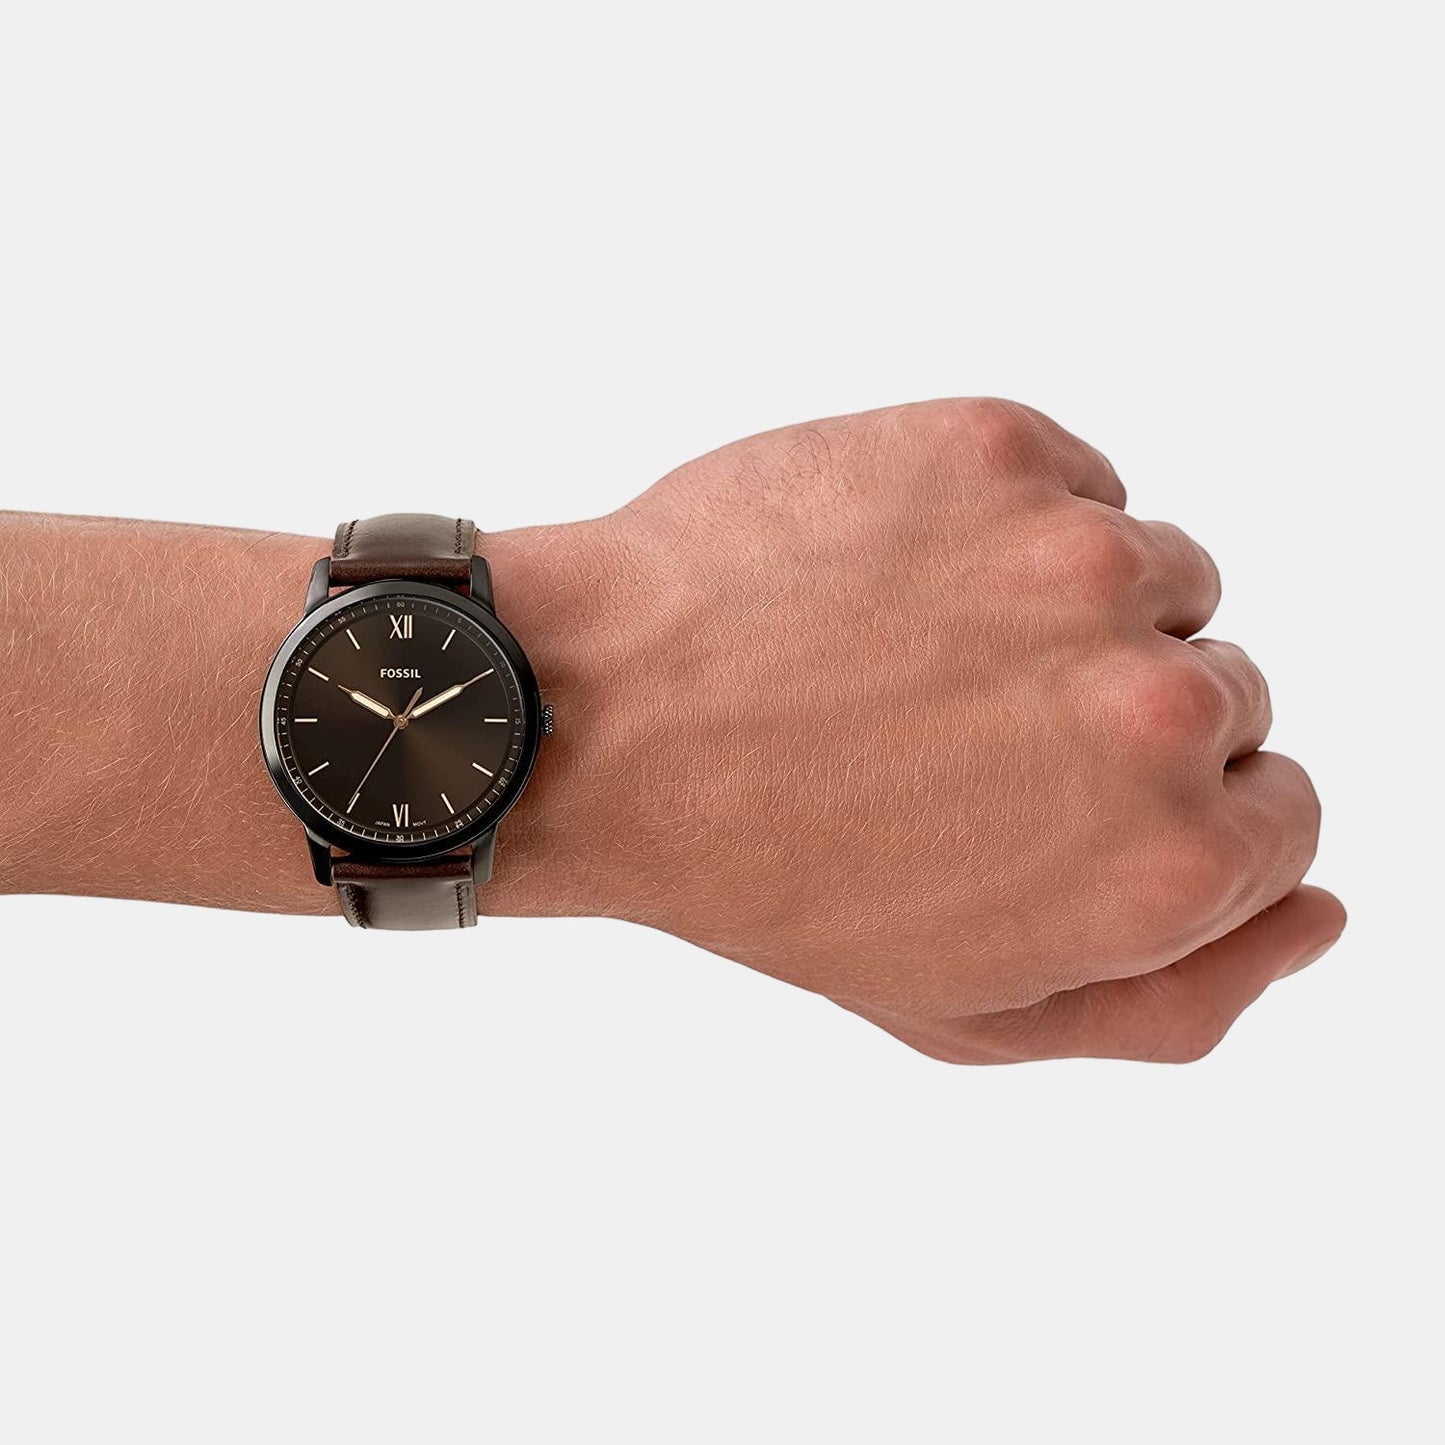 Male Black Analog Leather Watch FS5551